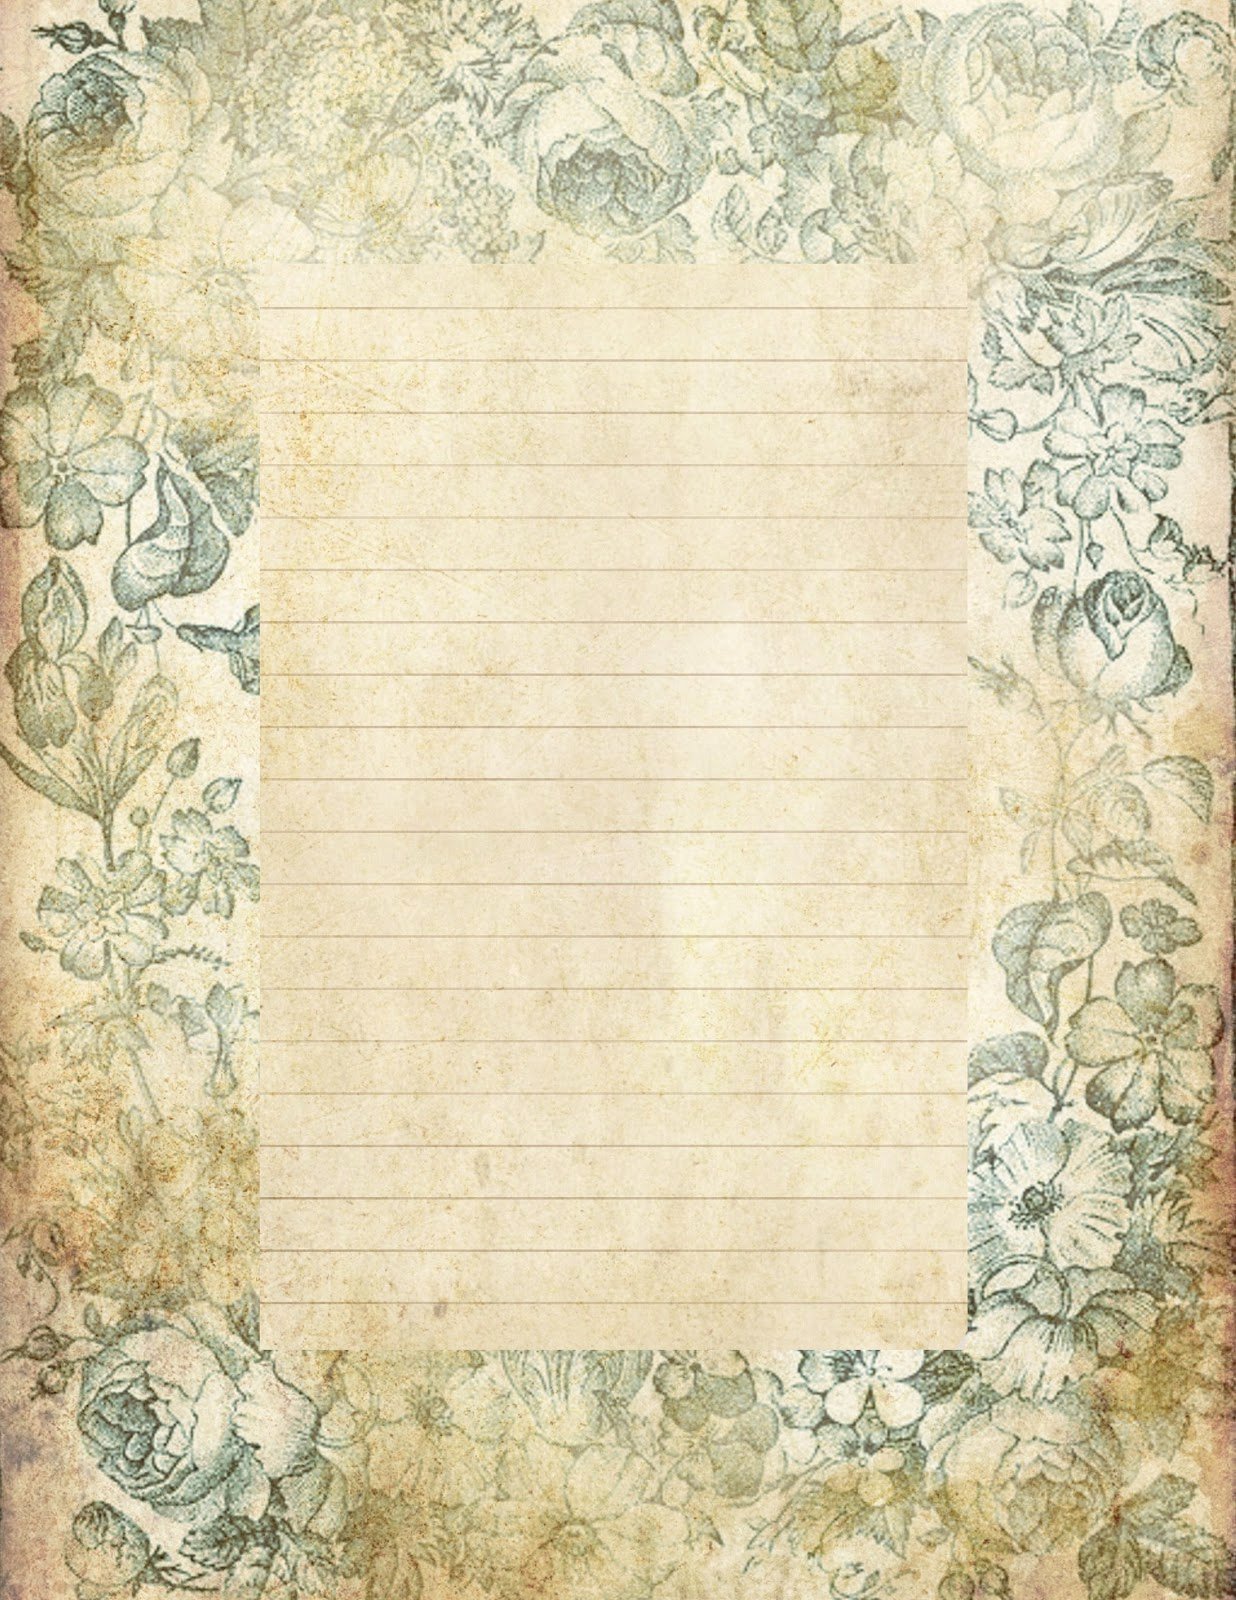 Free Stationery Paper Templates Elegant Love Letter Paper